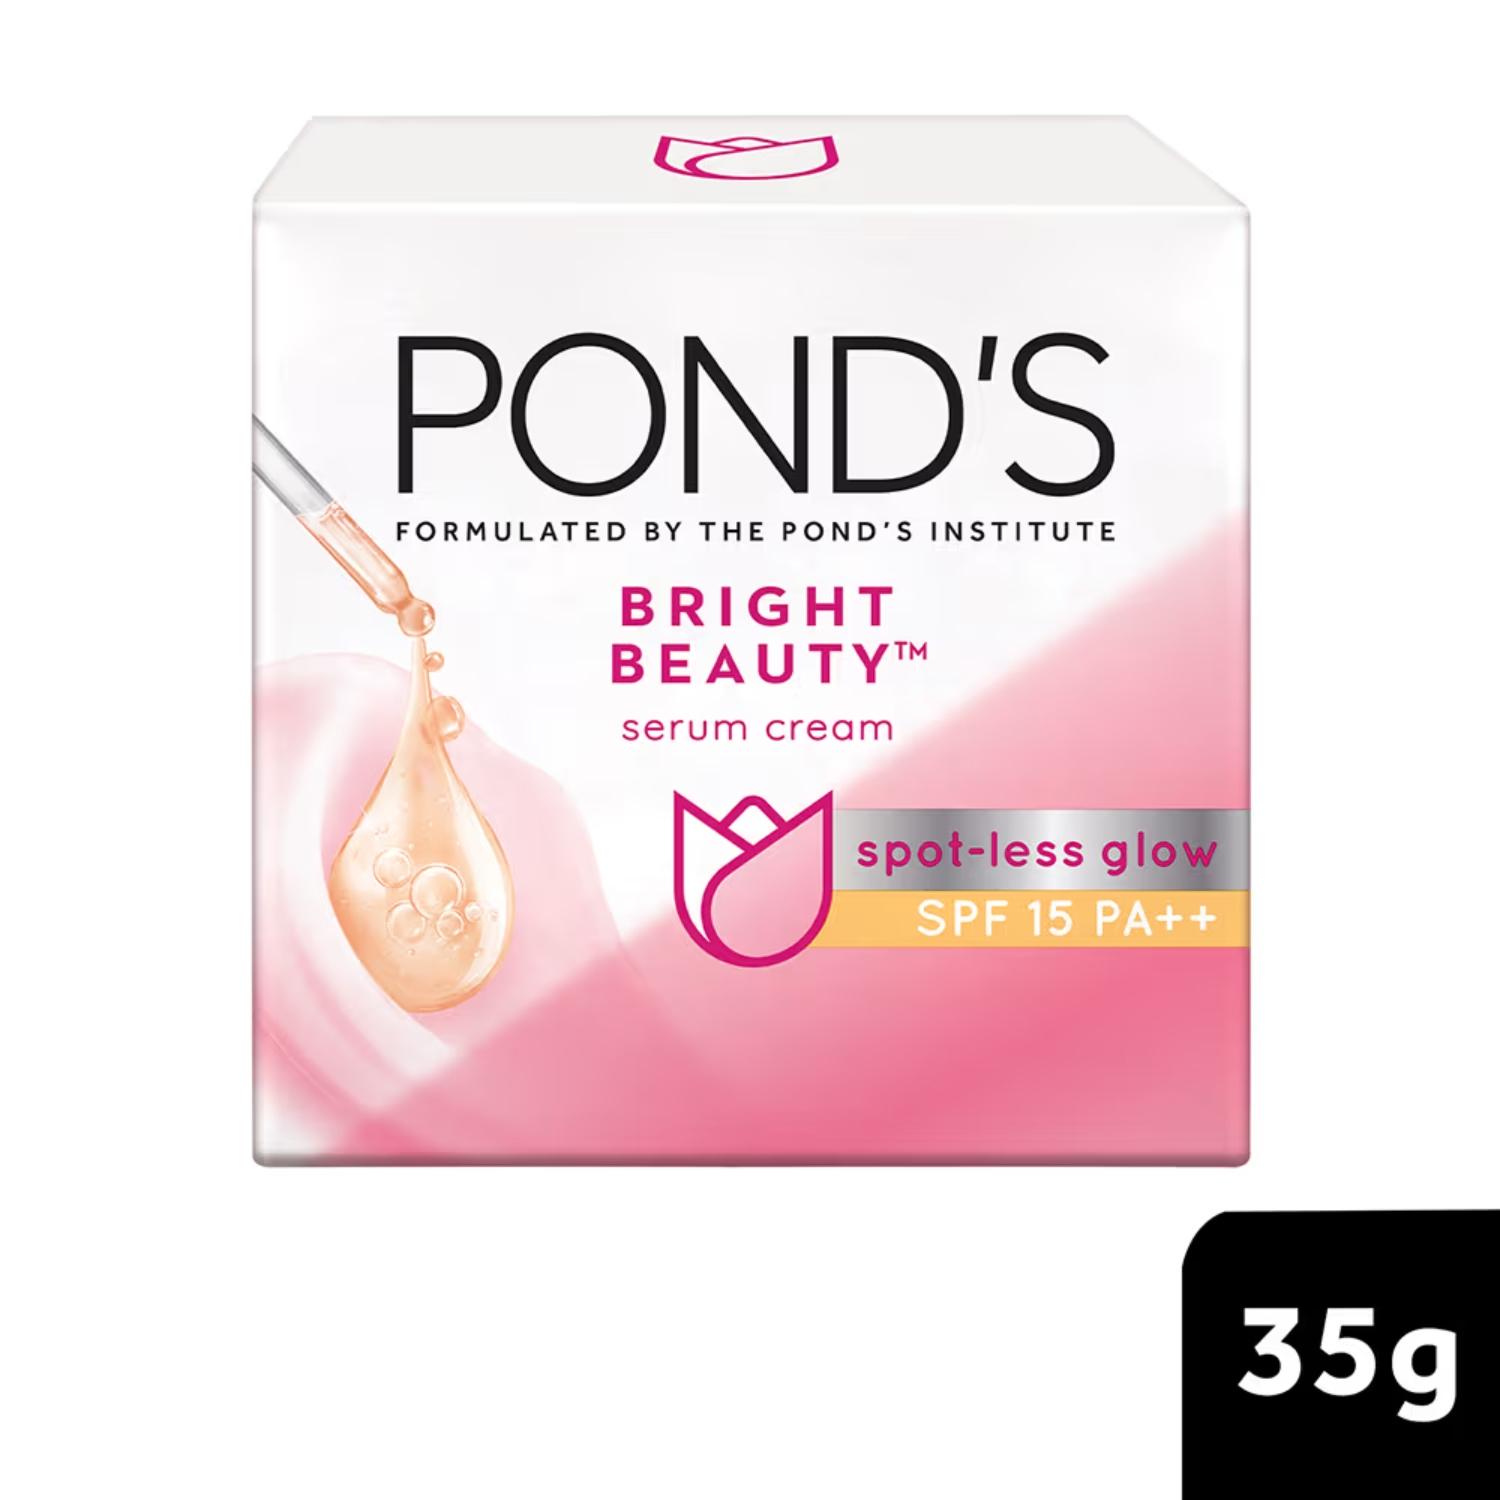 pond's-bright-beauty-spf-15-pa++-spot-less-glow-serum-cream-(35g)